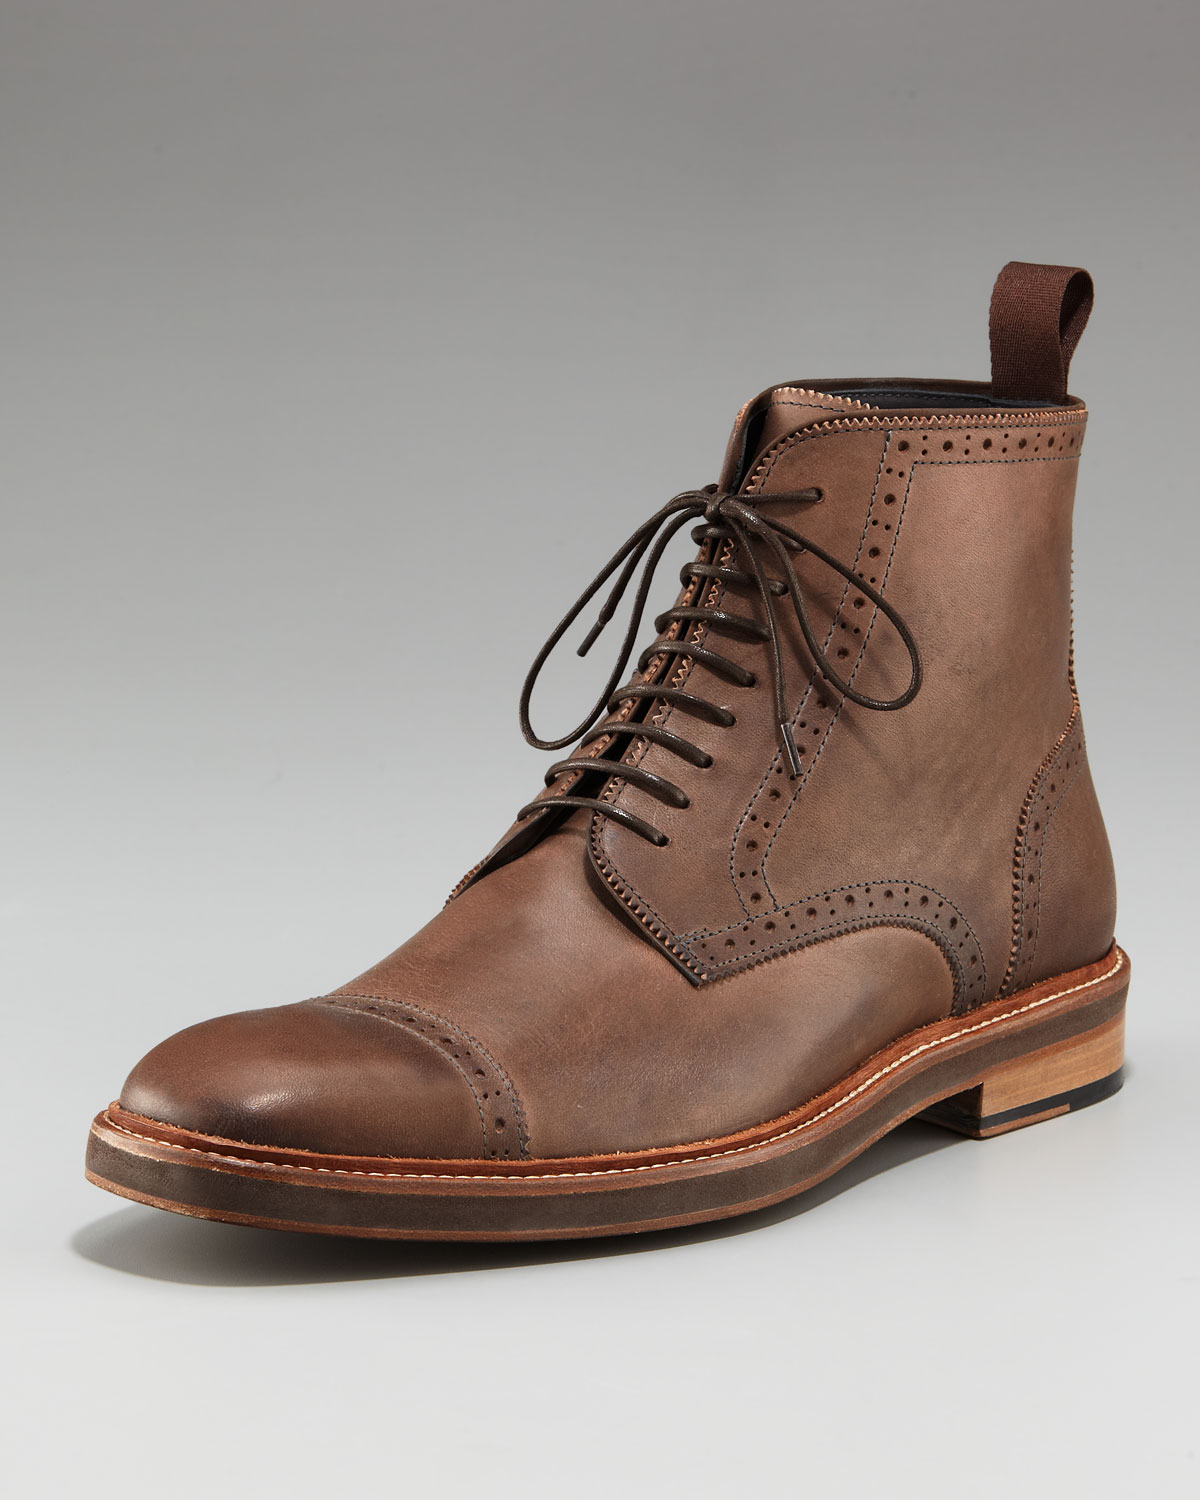 Lyst - Lanvin Cap-toe Boot in Brown for Men